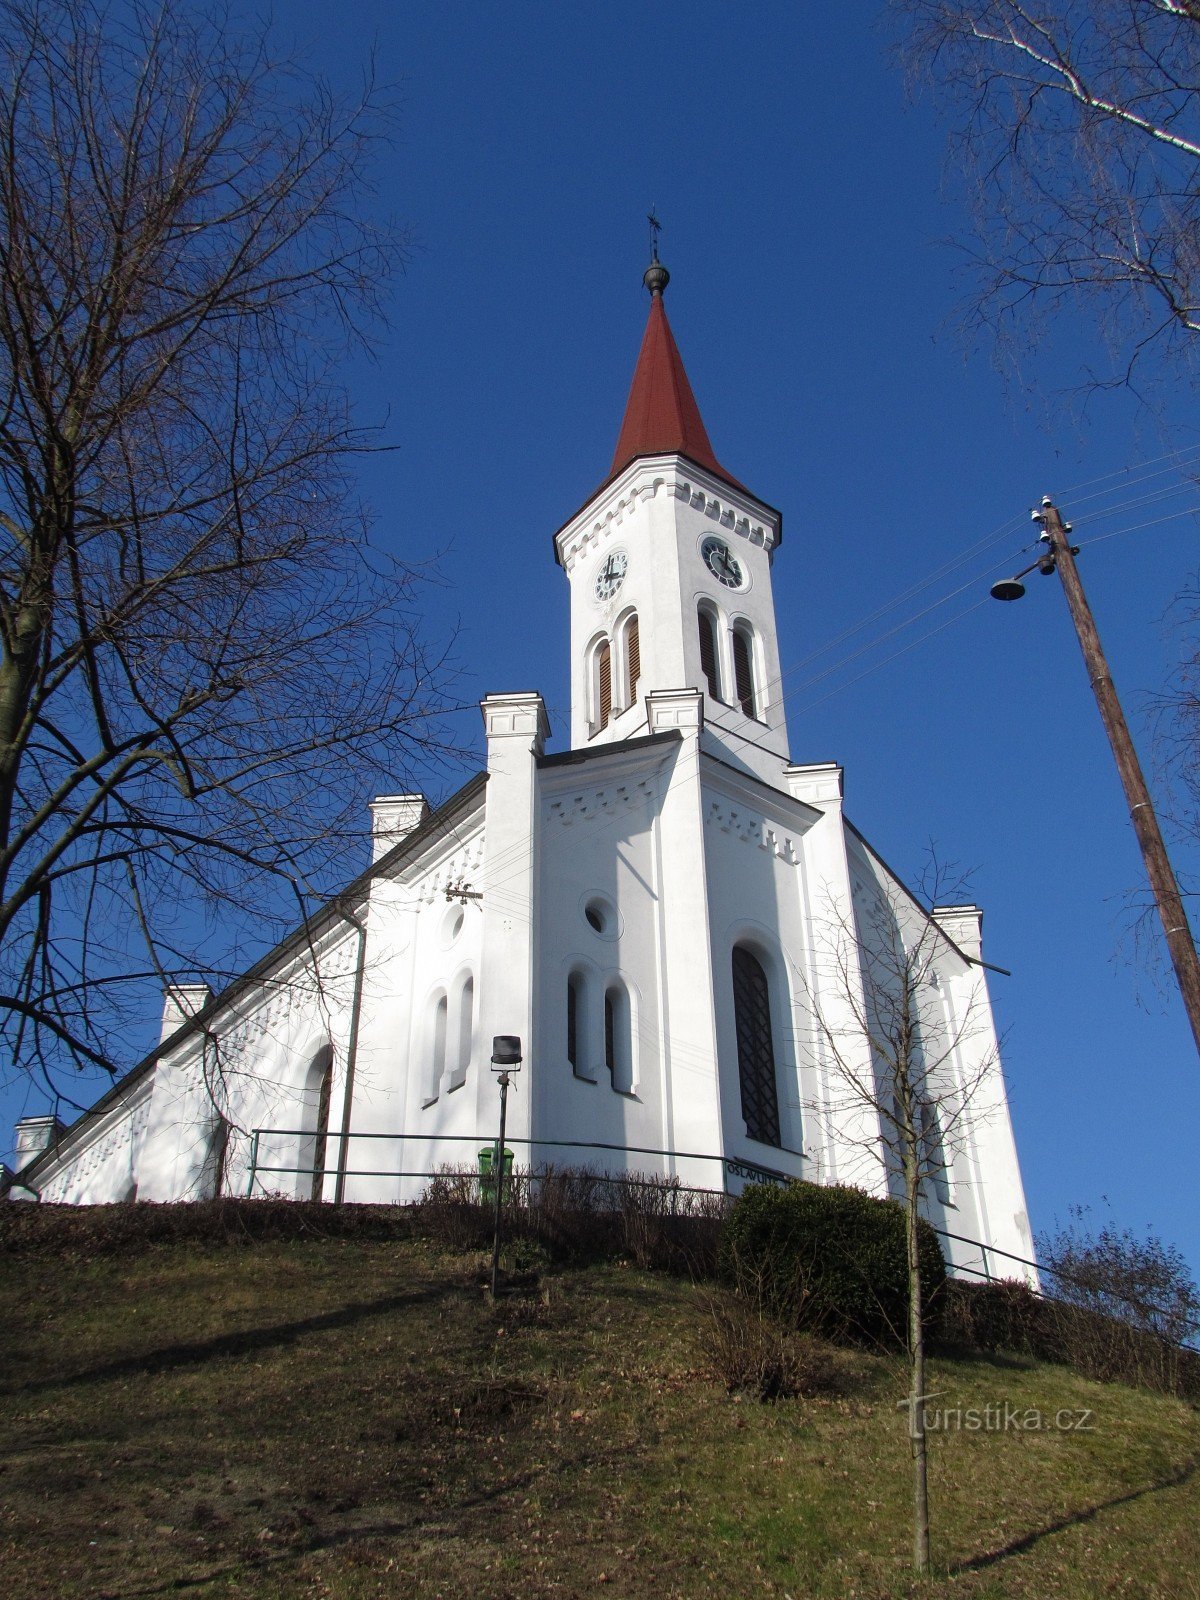 Zádveřice-Raková - evangelical church